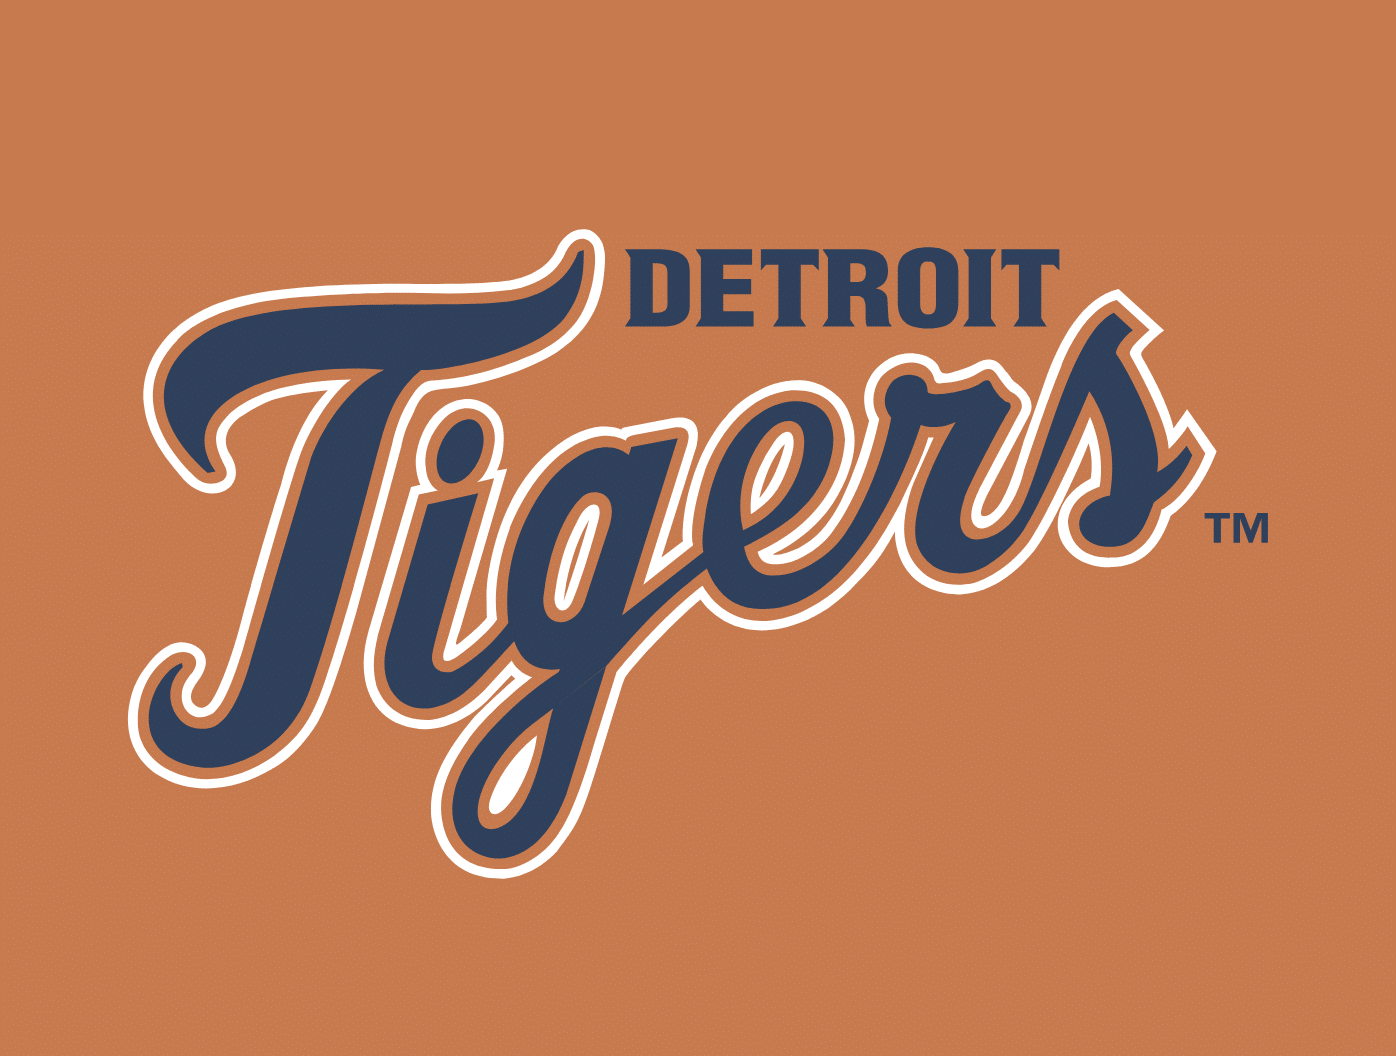 Detroit Tigers announce coaching changes